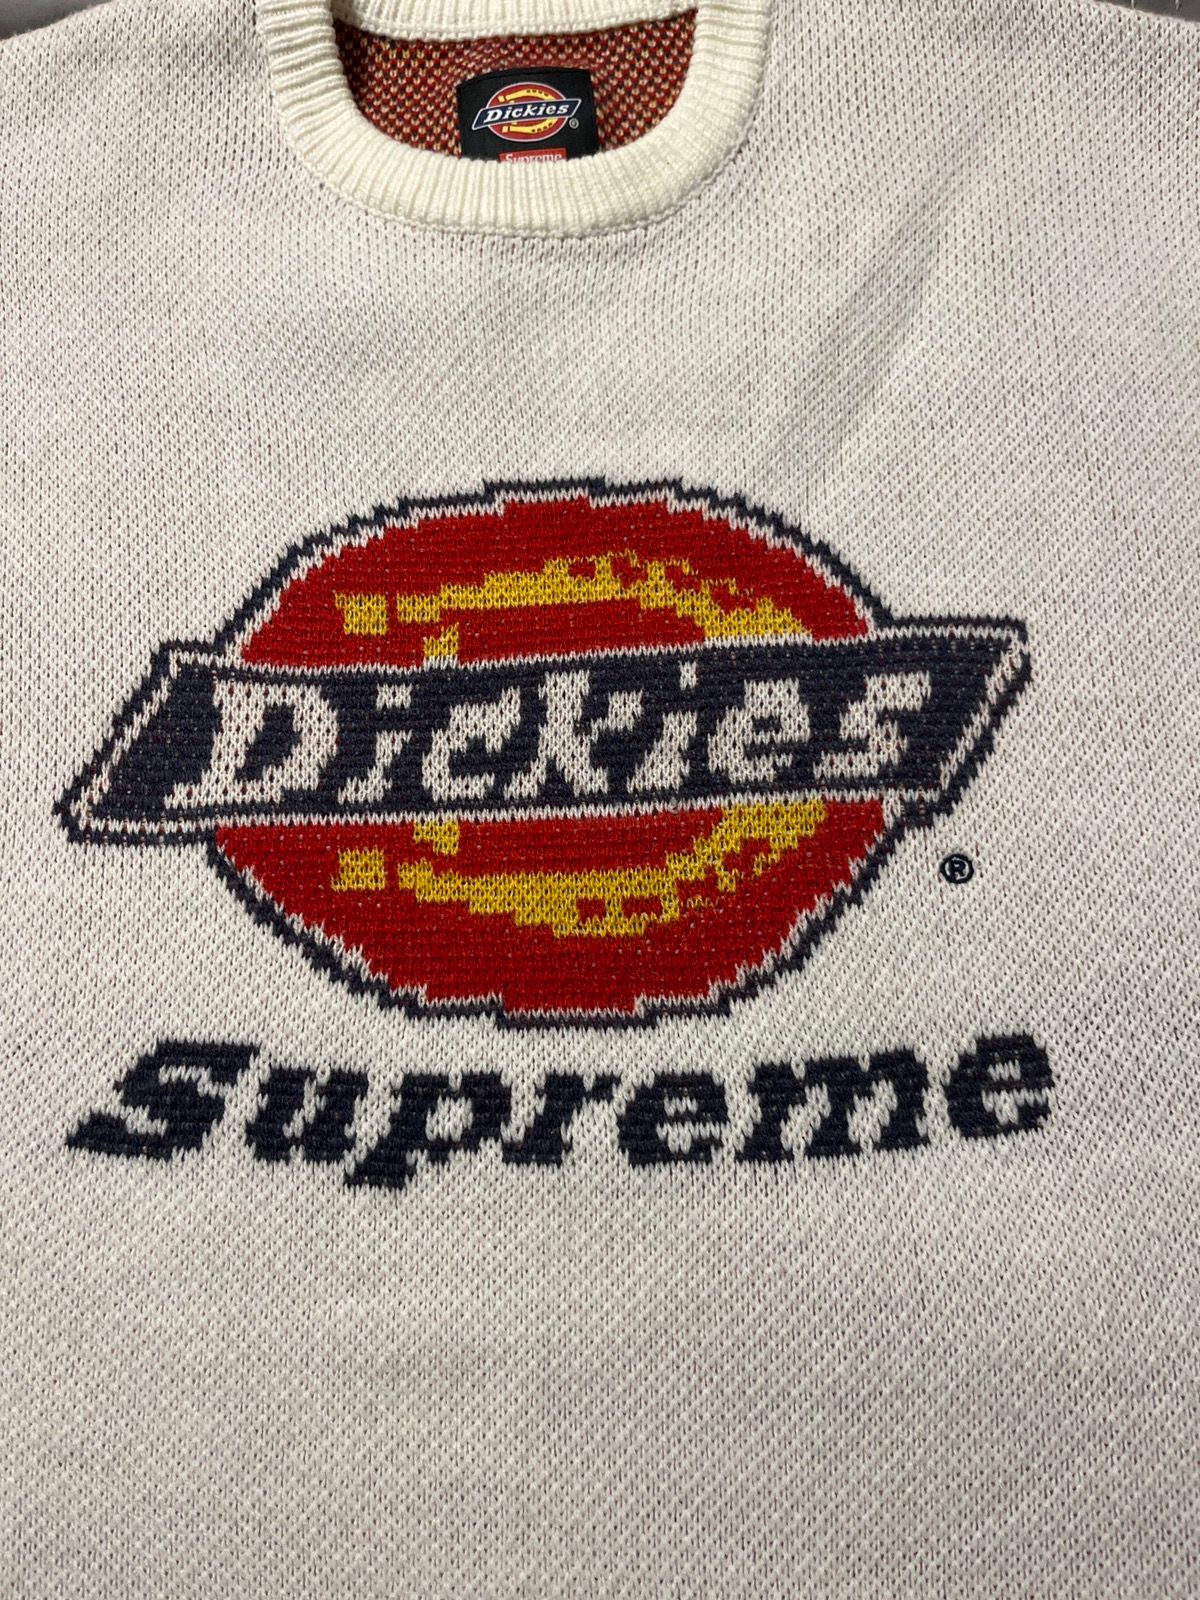 Supreme Supreme Dickies Sweater | Grailed